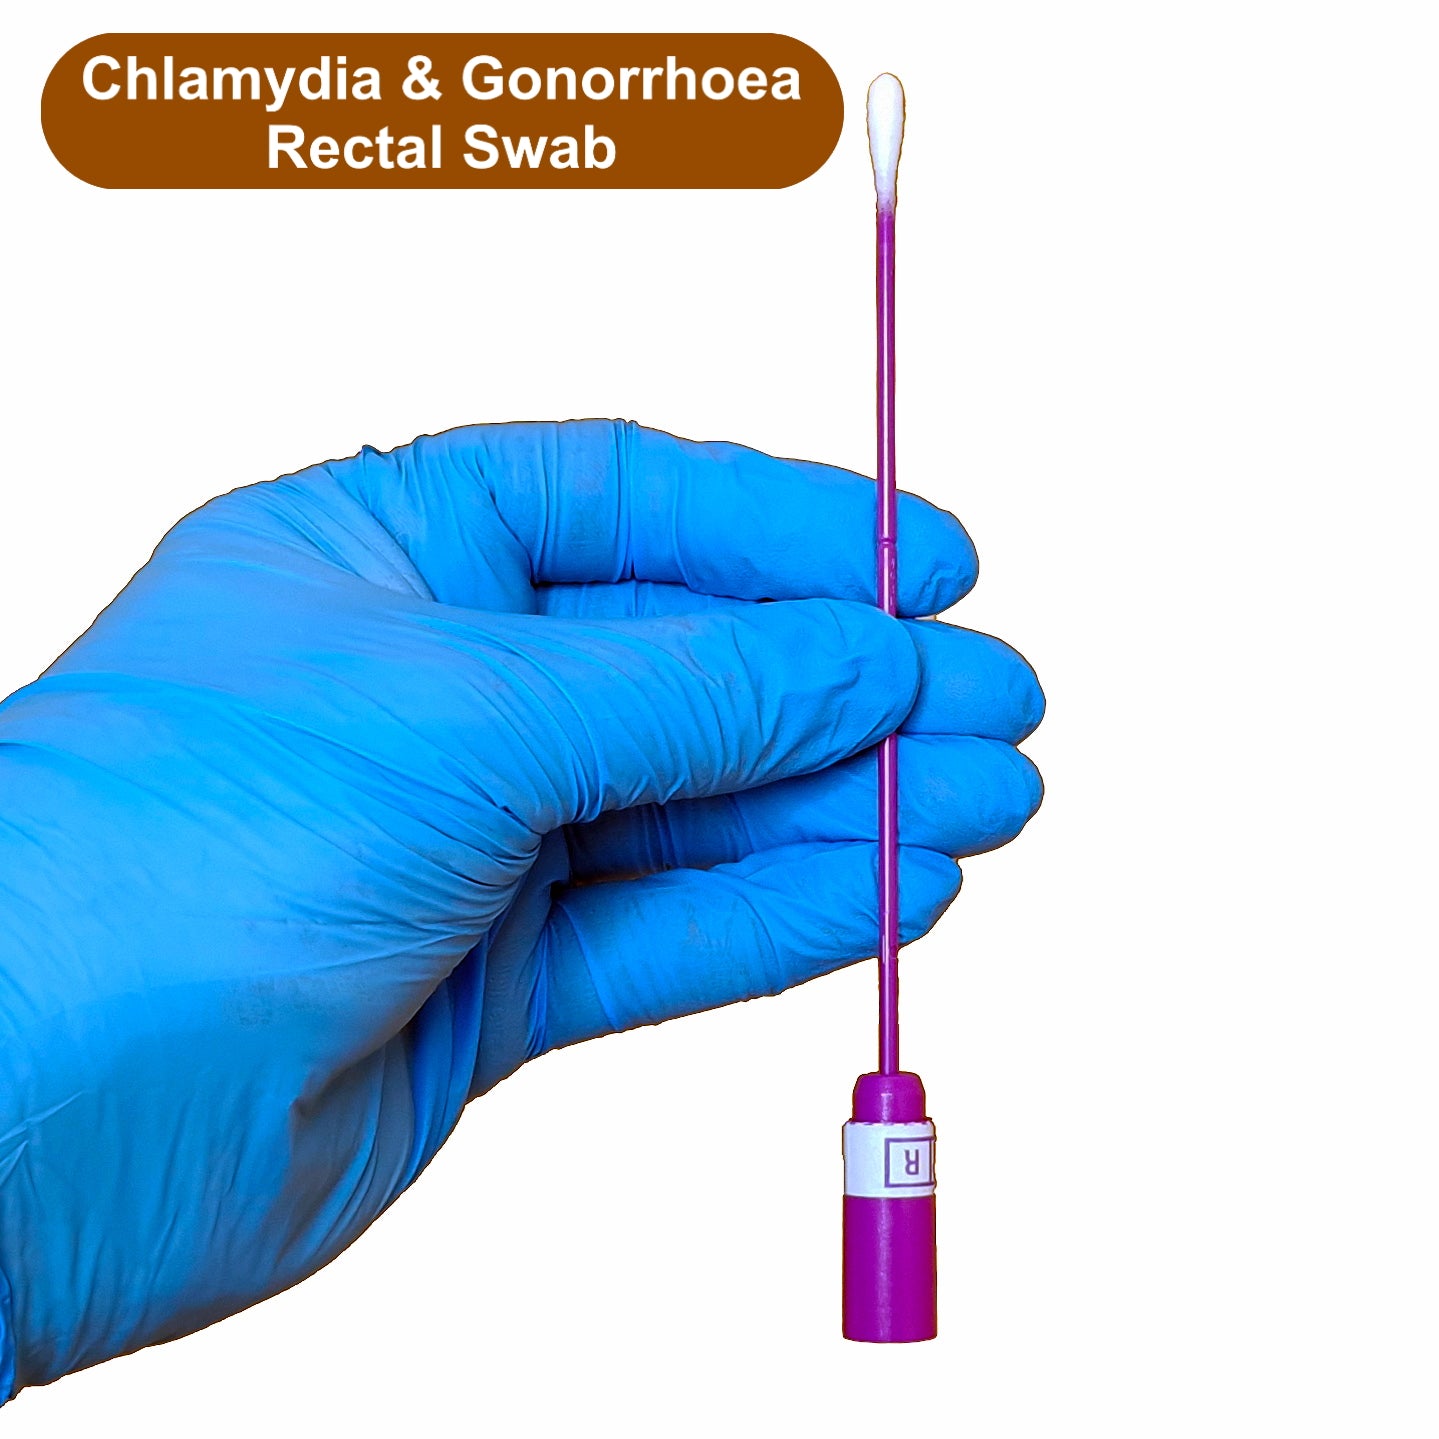 Chlamydia & Gonorrhoea Rectal Swab